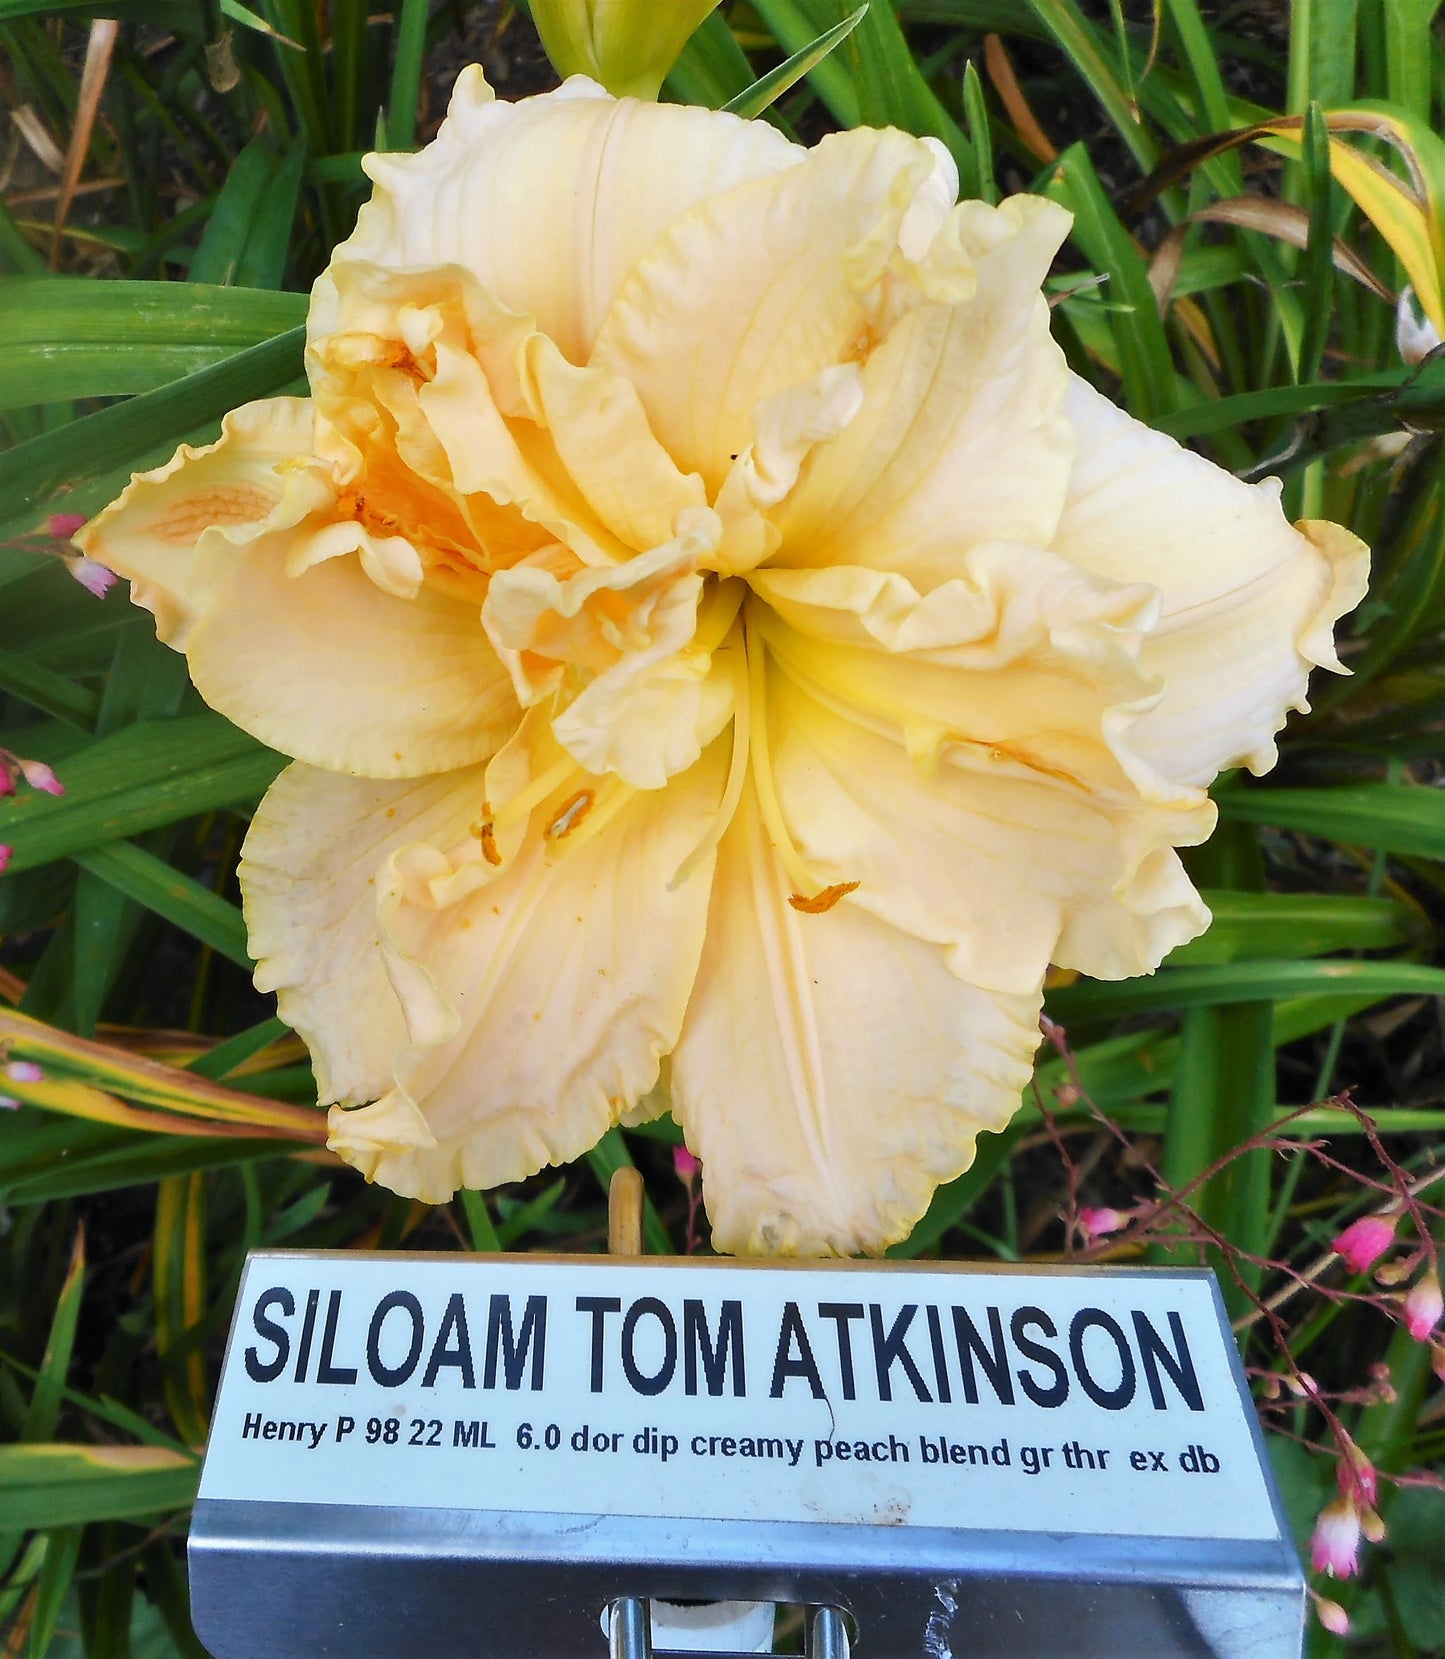 SILOAM TOM ATKINSON